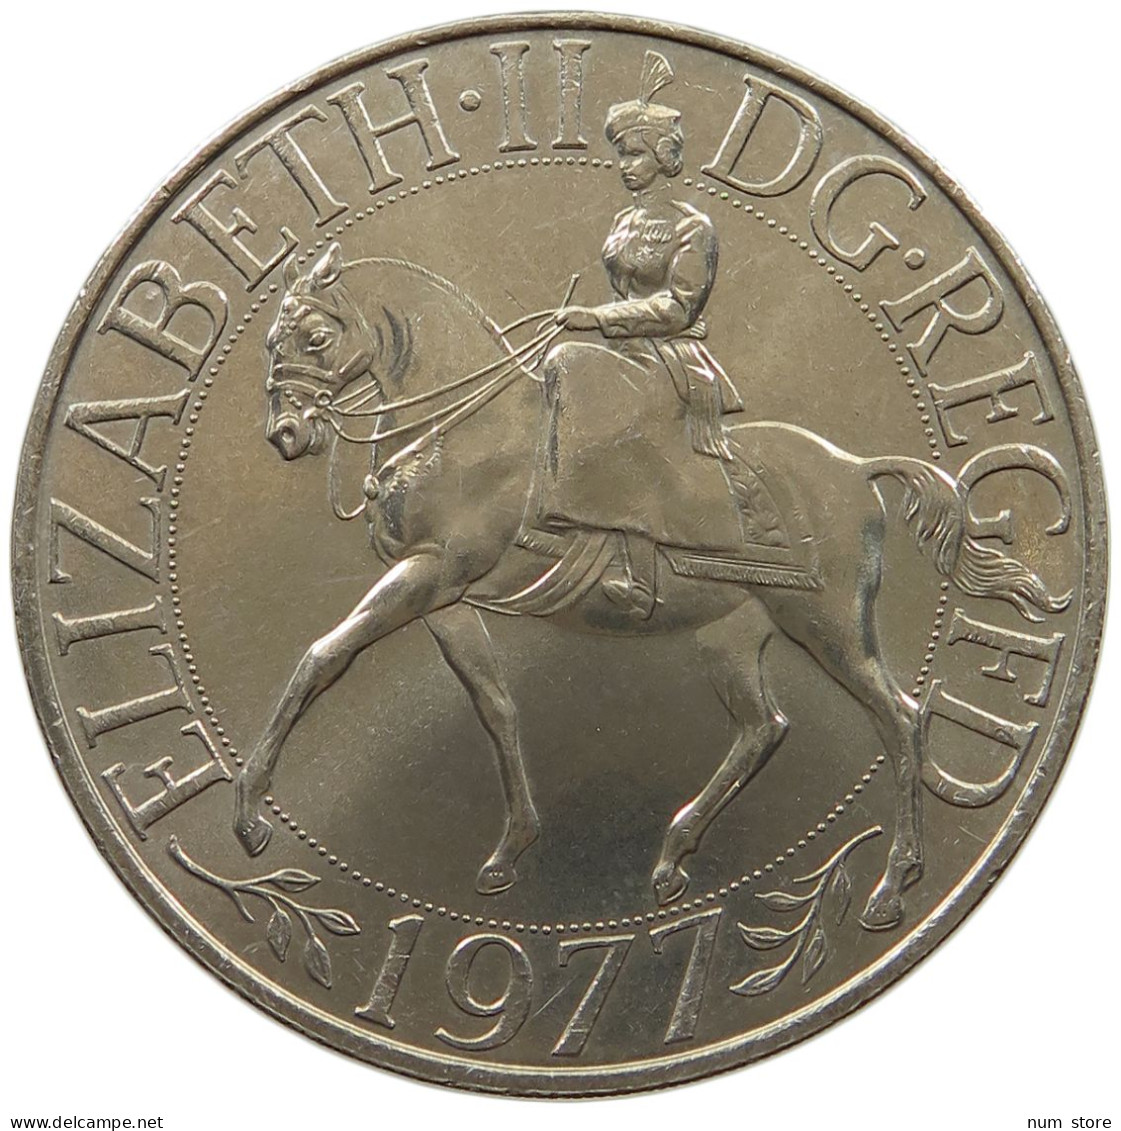 GREAT BRITAIN 5 SHILLINGS 1977 Elisabeth II. (1952-) #a096 0211 - L. 1 Crown